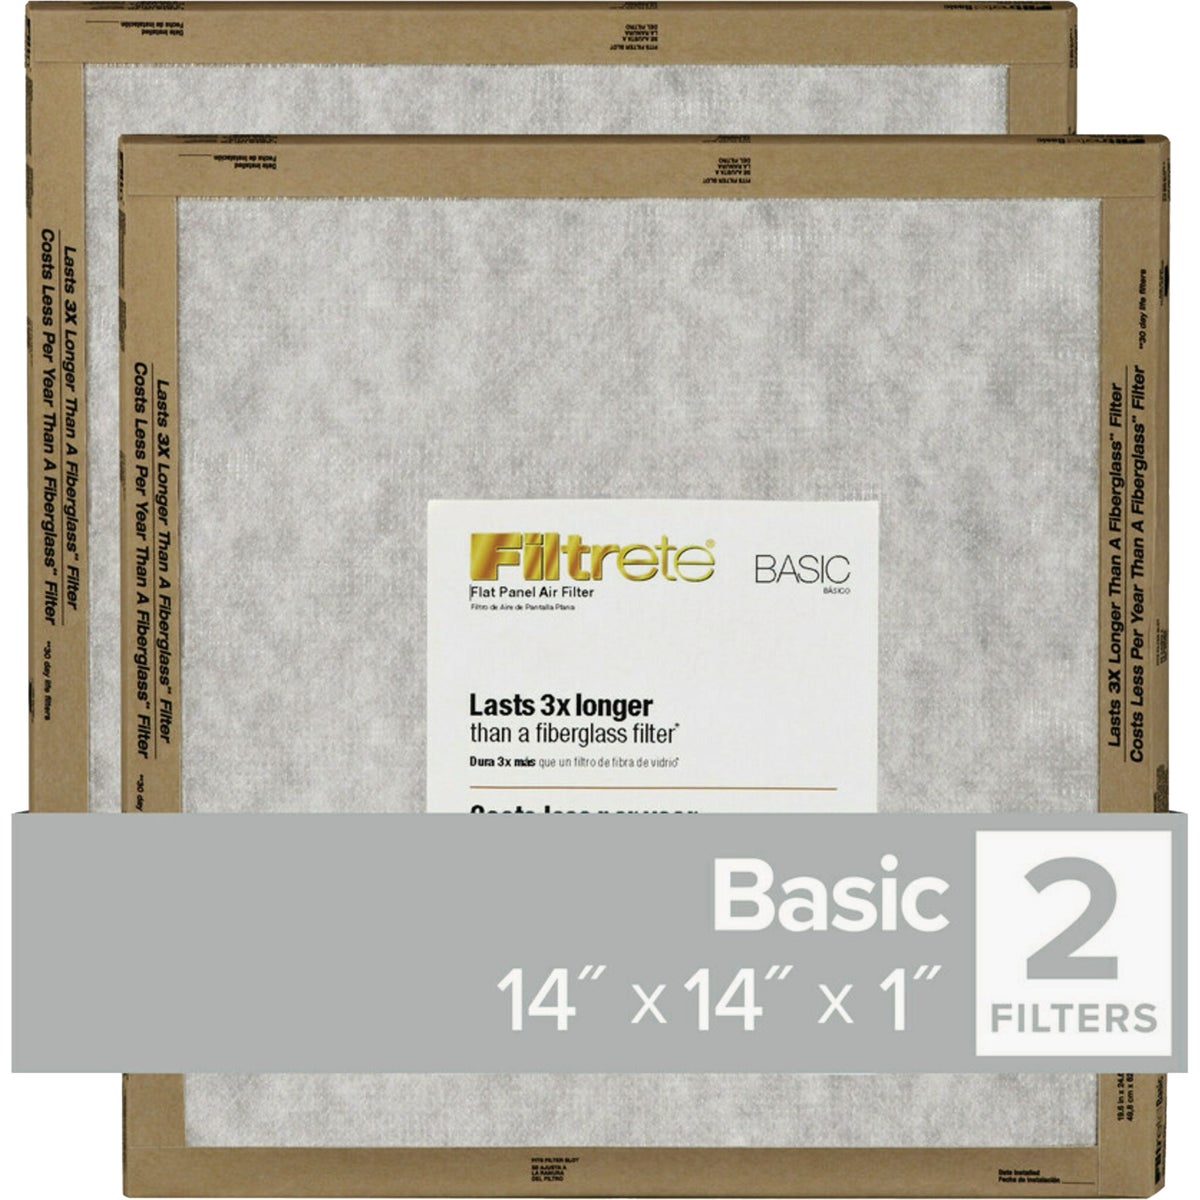 3M FPL11-2PK-24 3M Filtrete 14 In. x 14 In. x 1 In. Basic MPR Flat Panel Furnance Filter, (2-Pack) FPL11-2PK-24 Pack of 24